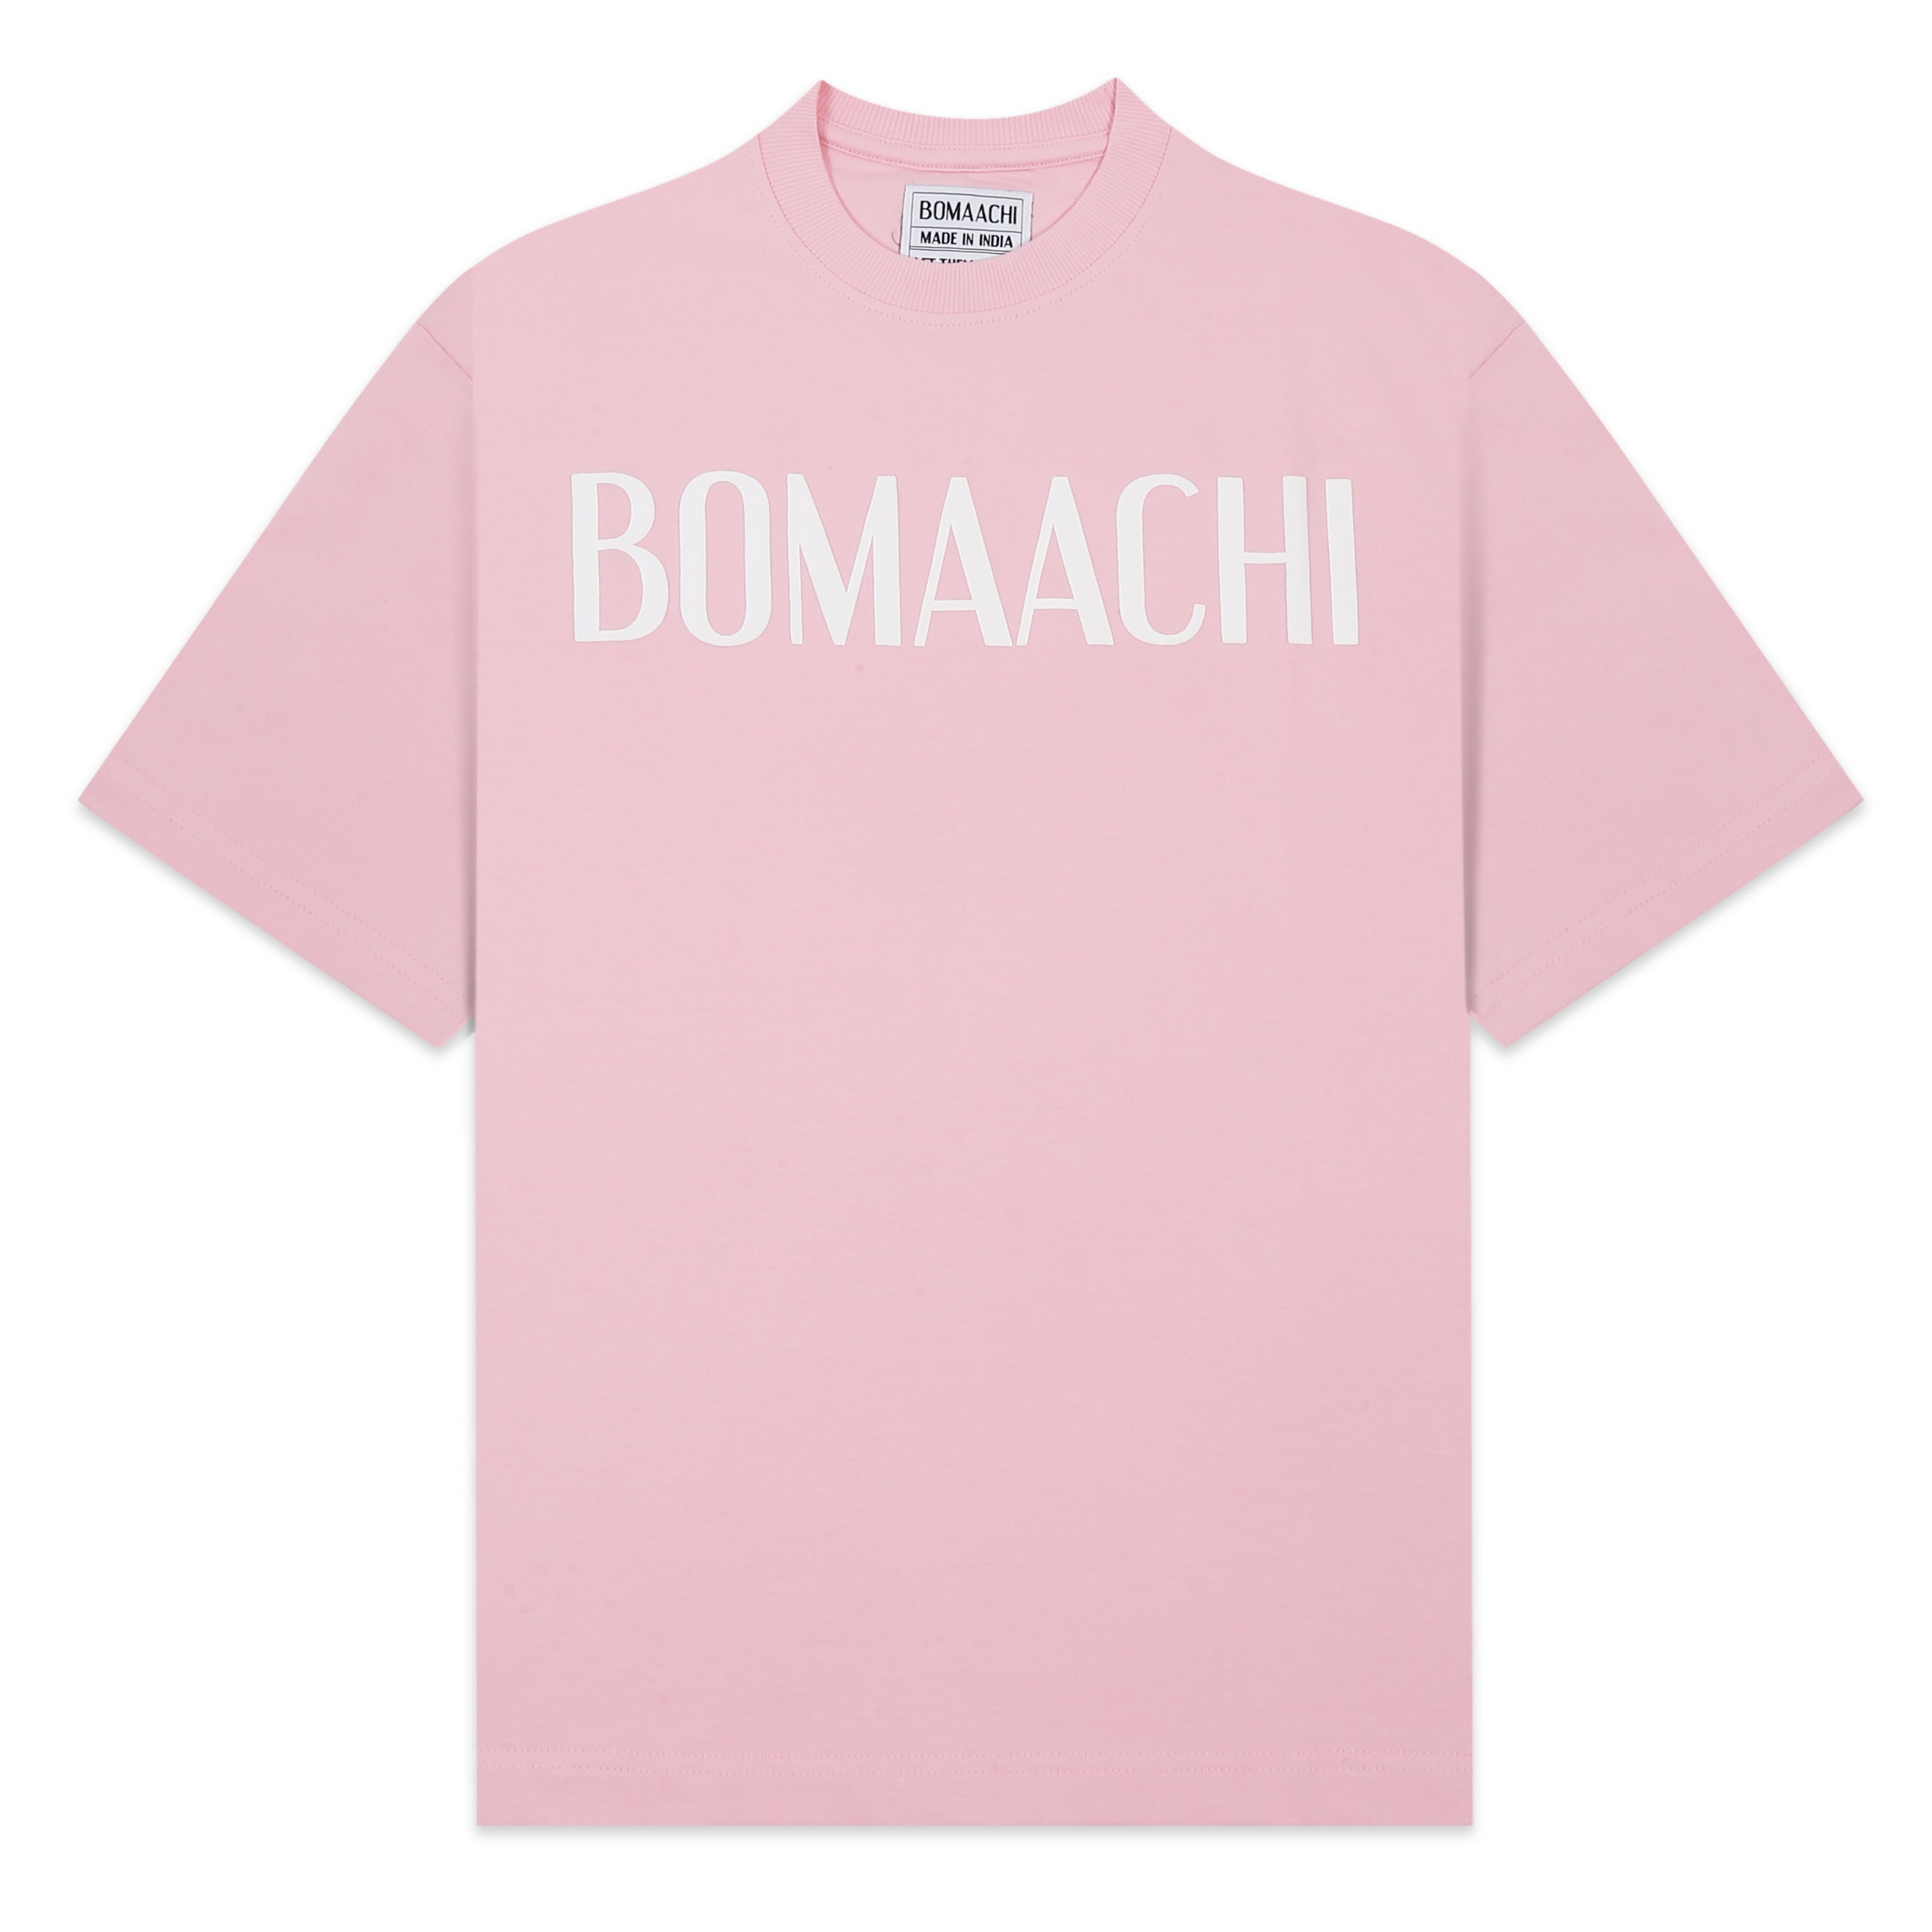 Let Them Judge Printed Baby Pink T-shirt